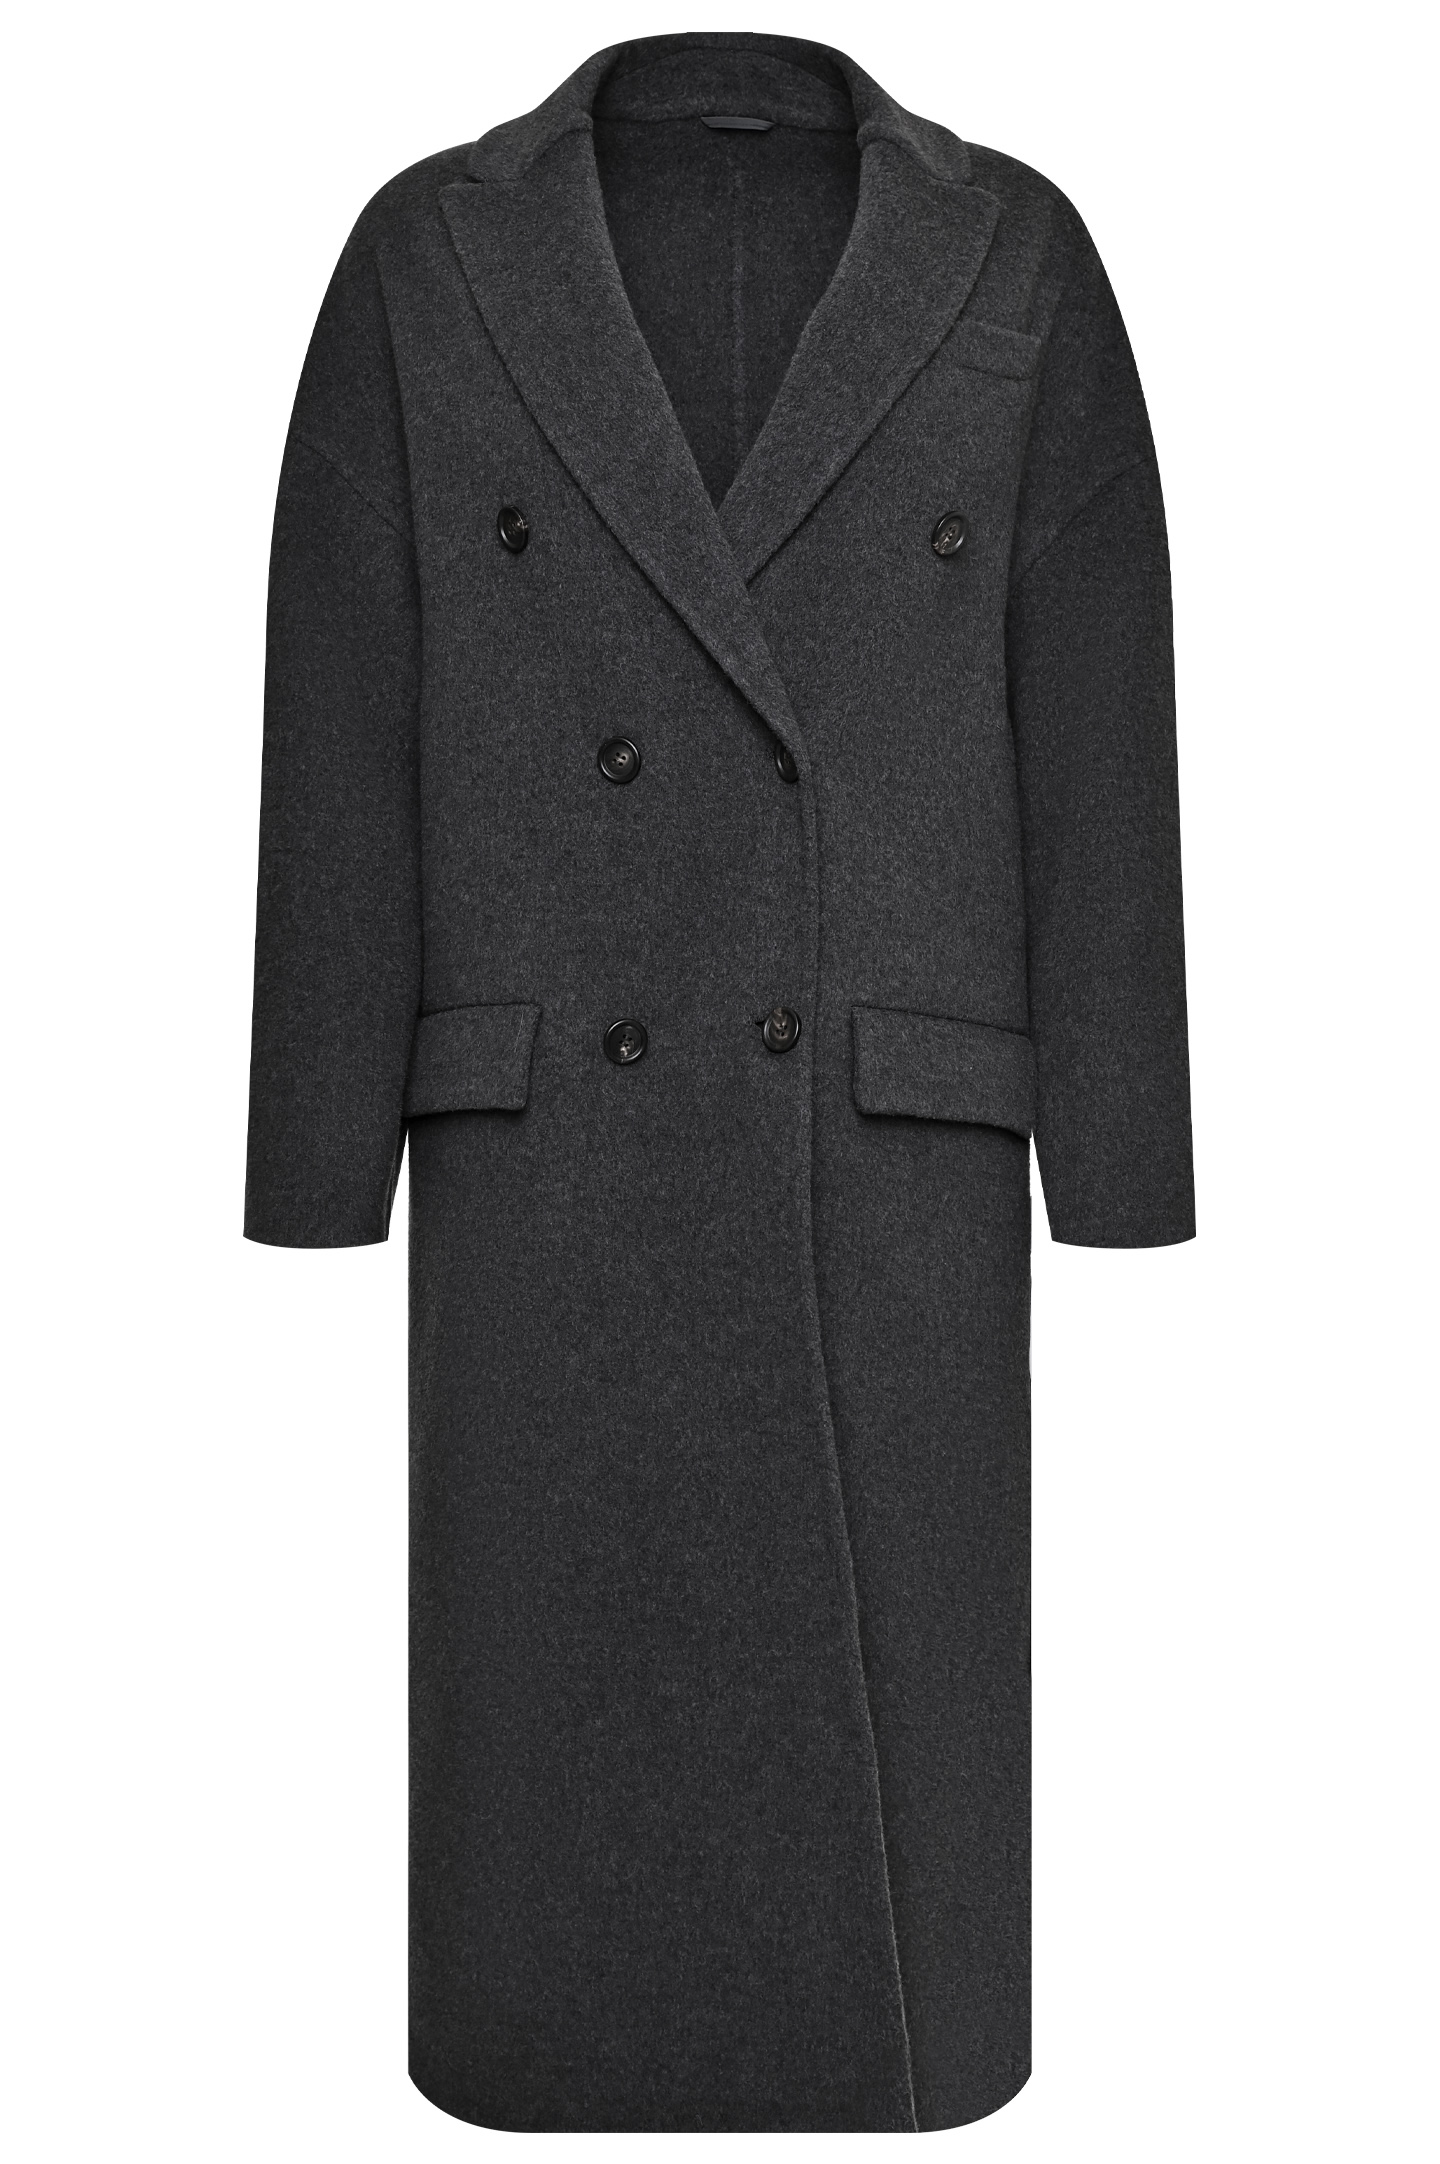 Пальто BRUNELLO  CUCINELLI MD5329538, цвет: Серый, Женский